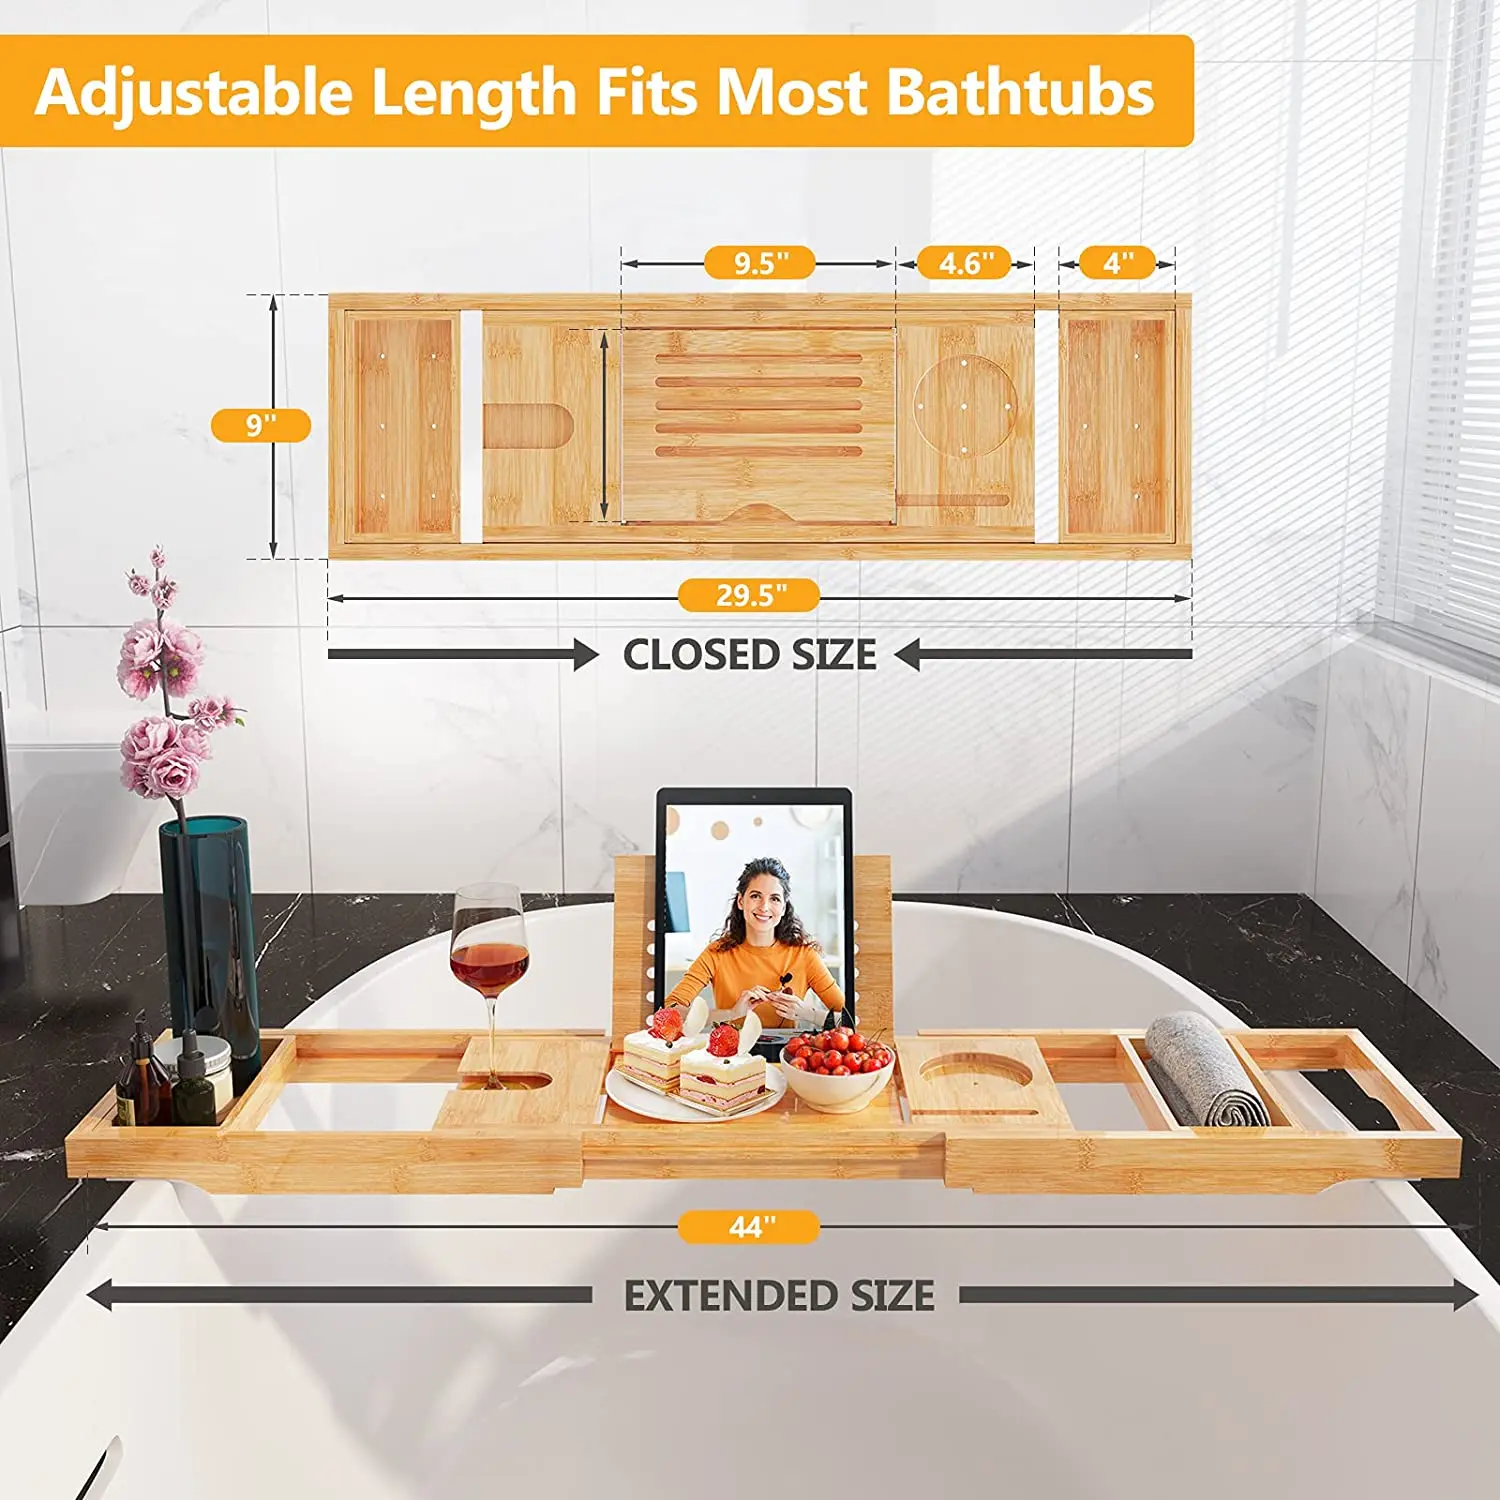 Bamboo Bathtub Caddy Tray Wood Bath Tray and Bath Caddy with Adjustable Foldable Legs for Bed